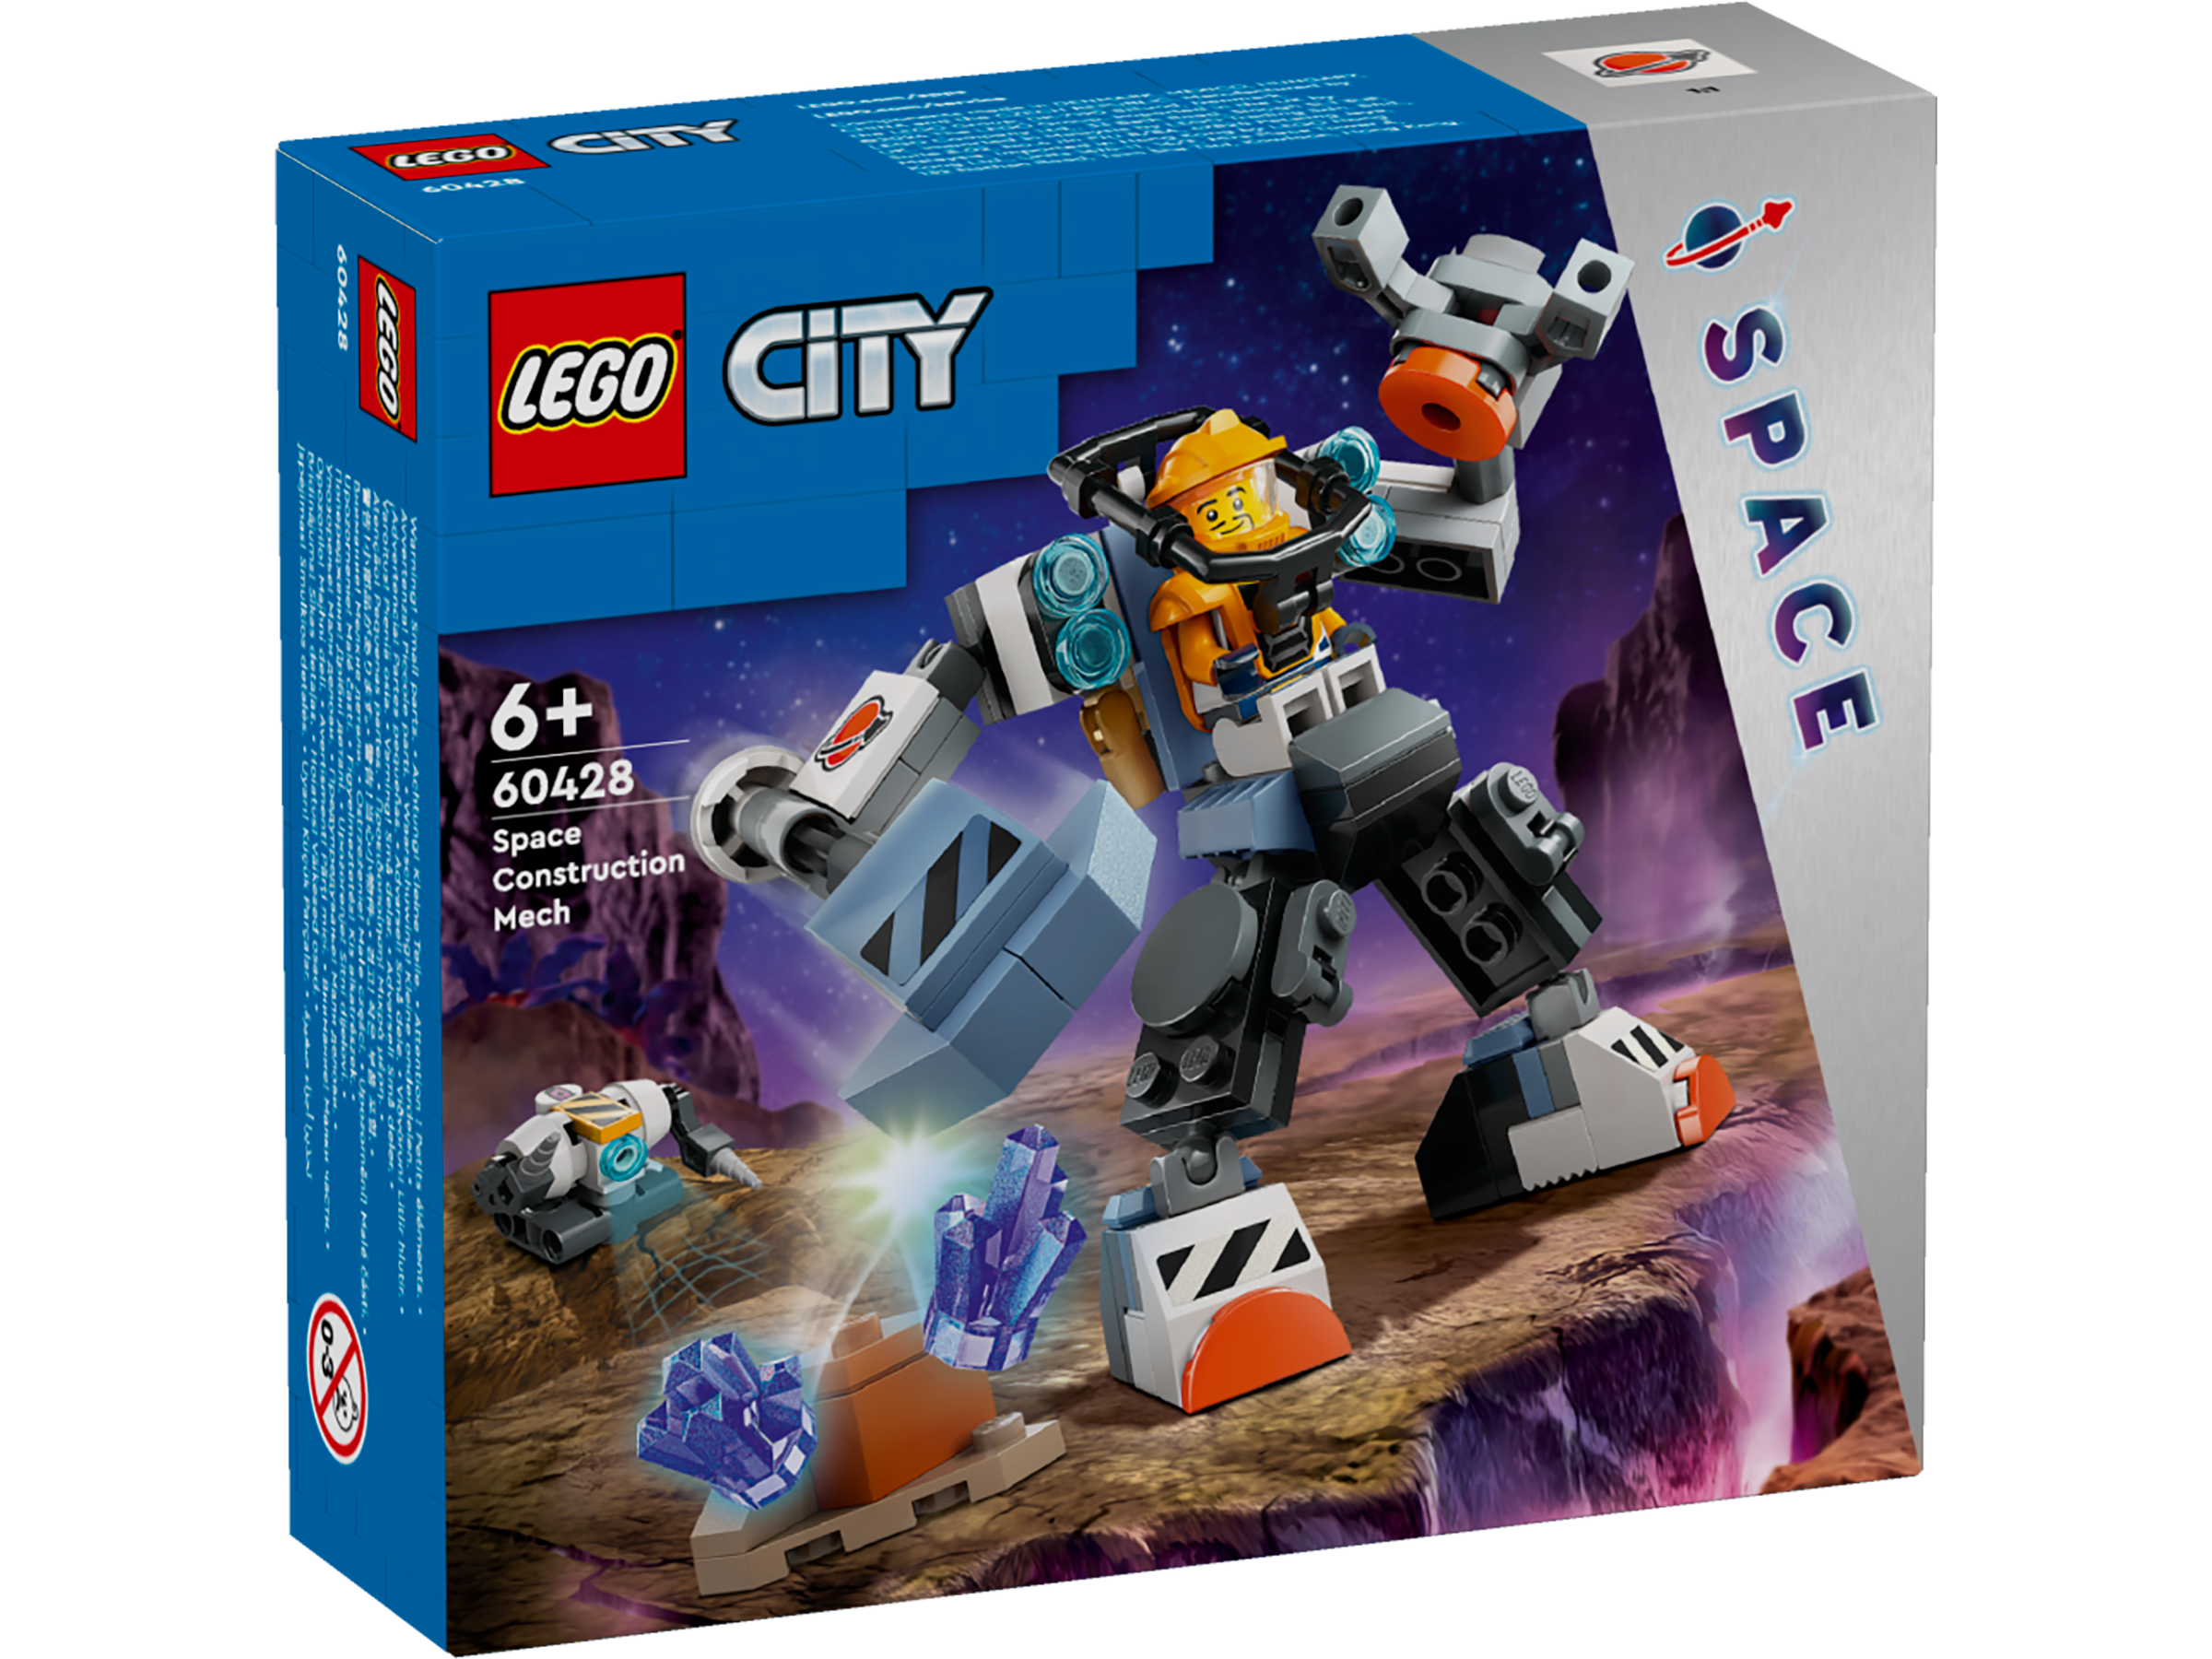 Lego 60428 Space Construction Mech